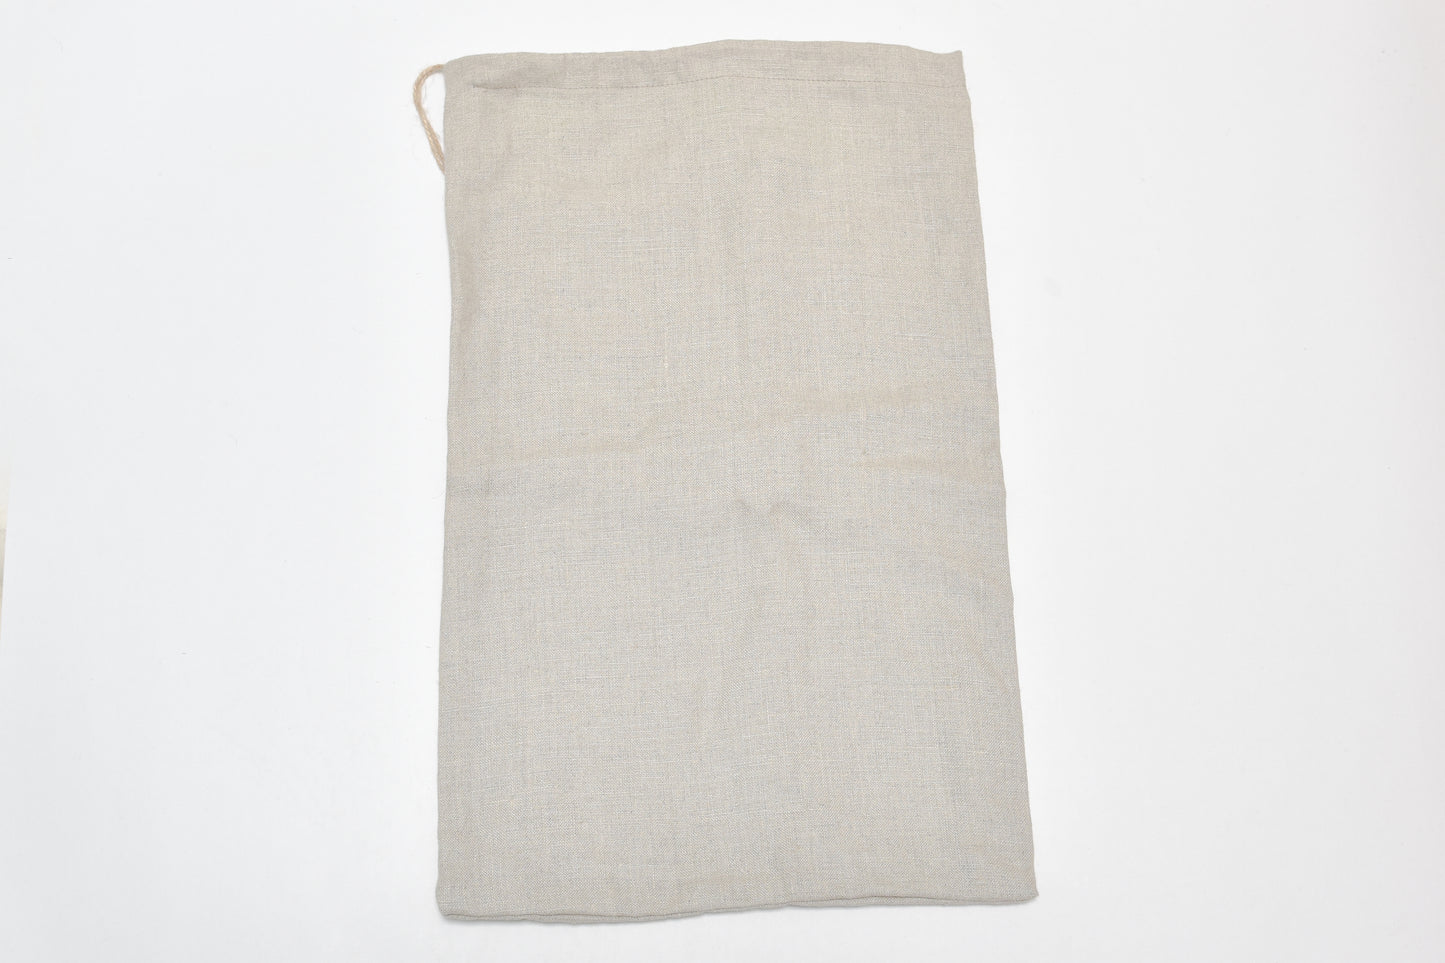 The Stitchery - Linen Bread Bags